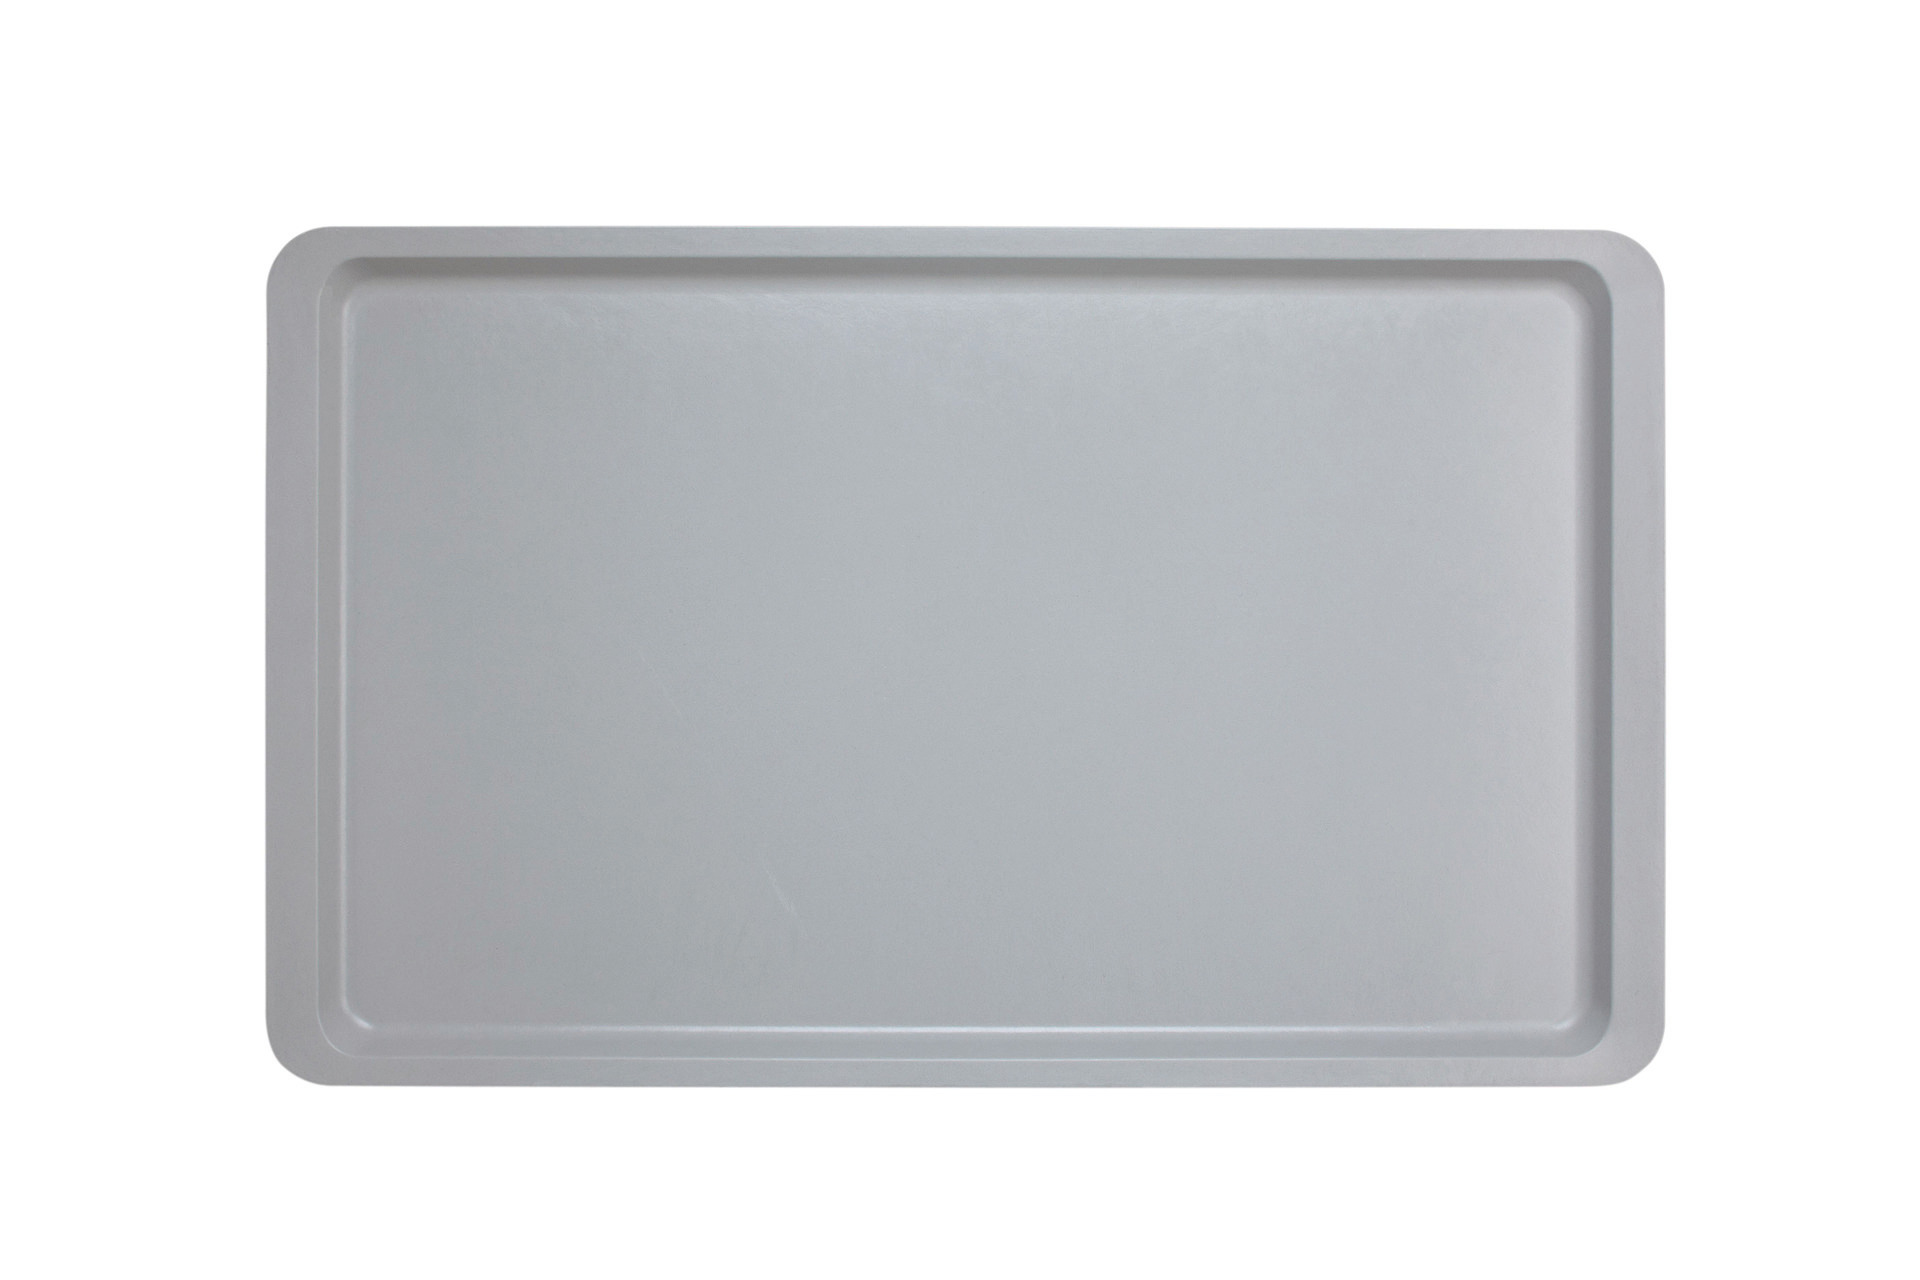 GN-Tablett Polyester Versa glatt GN 1/1 530 x 325 mm lichtgrau